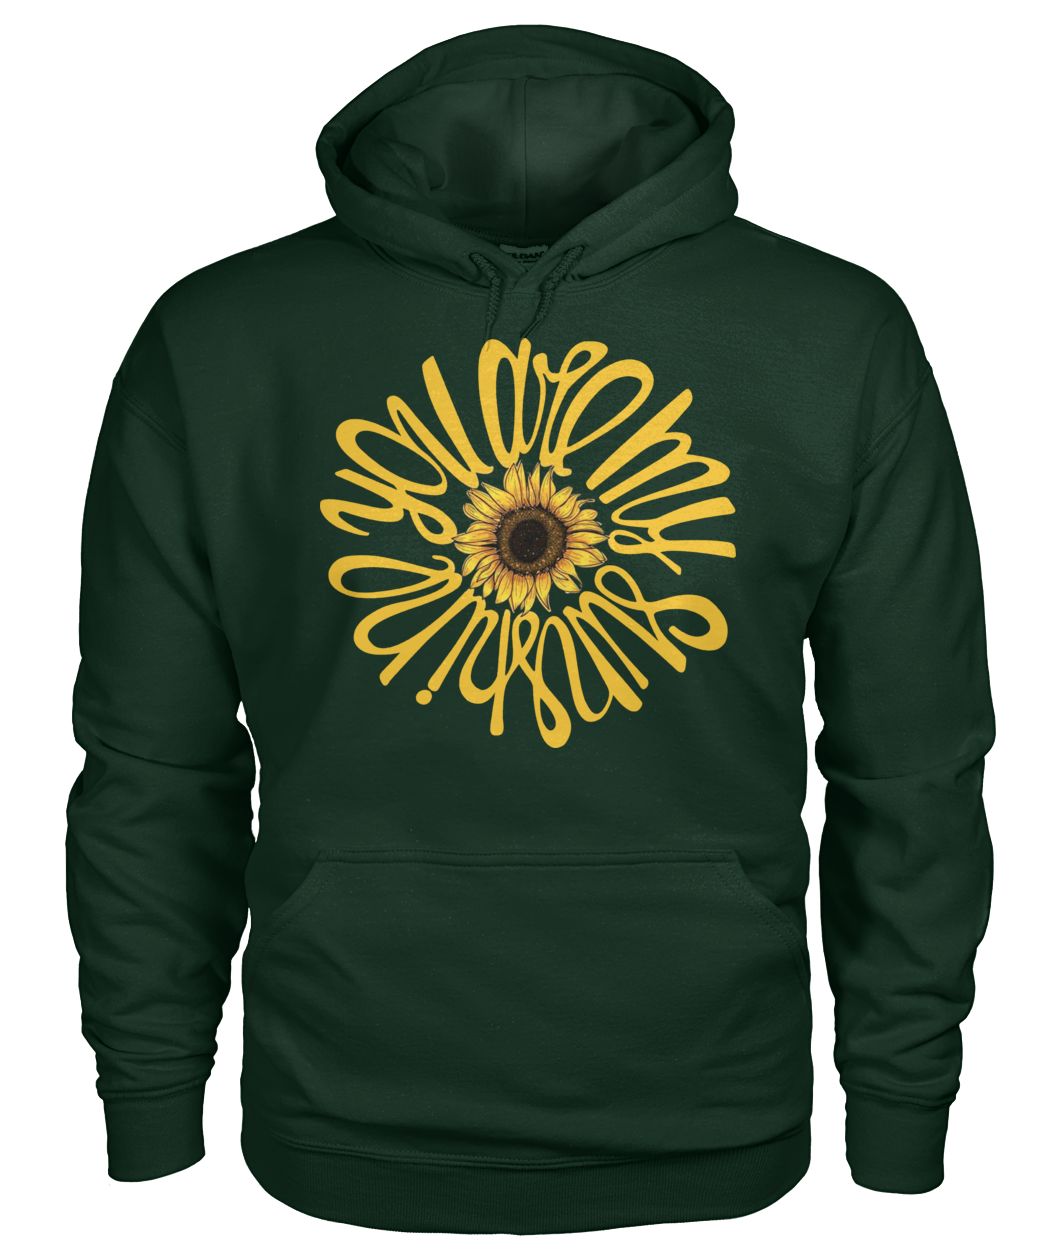 You are my sunshine sunflower gildan hoodie